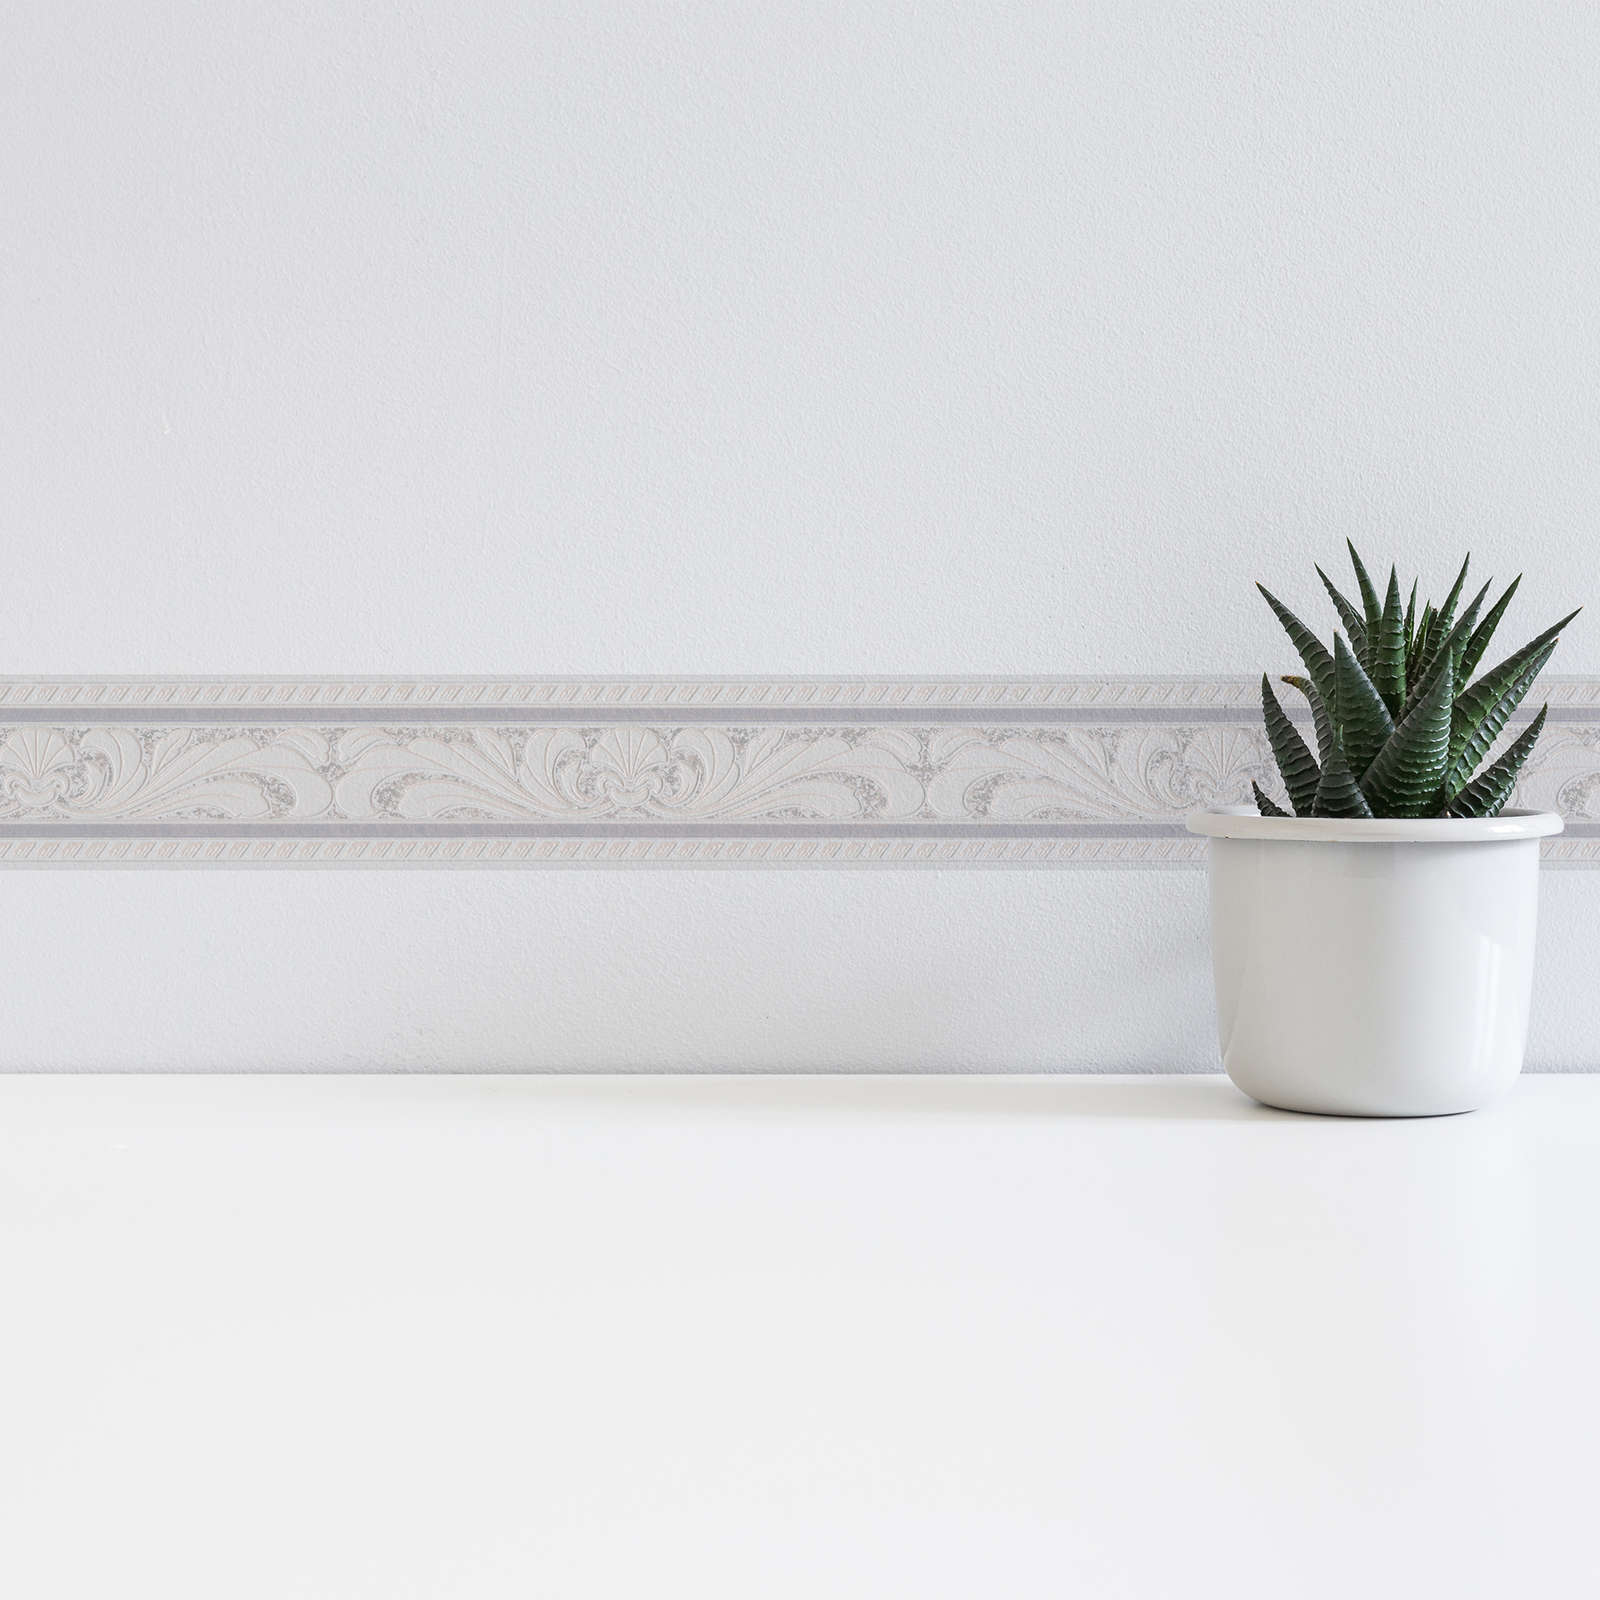             Tapetenbordüre mit Klassizismus Design – Creme, Weiß
        